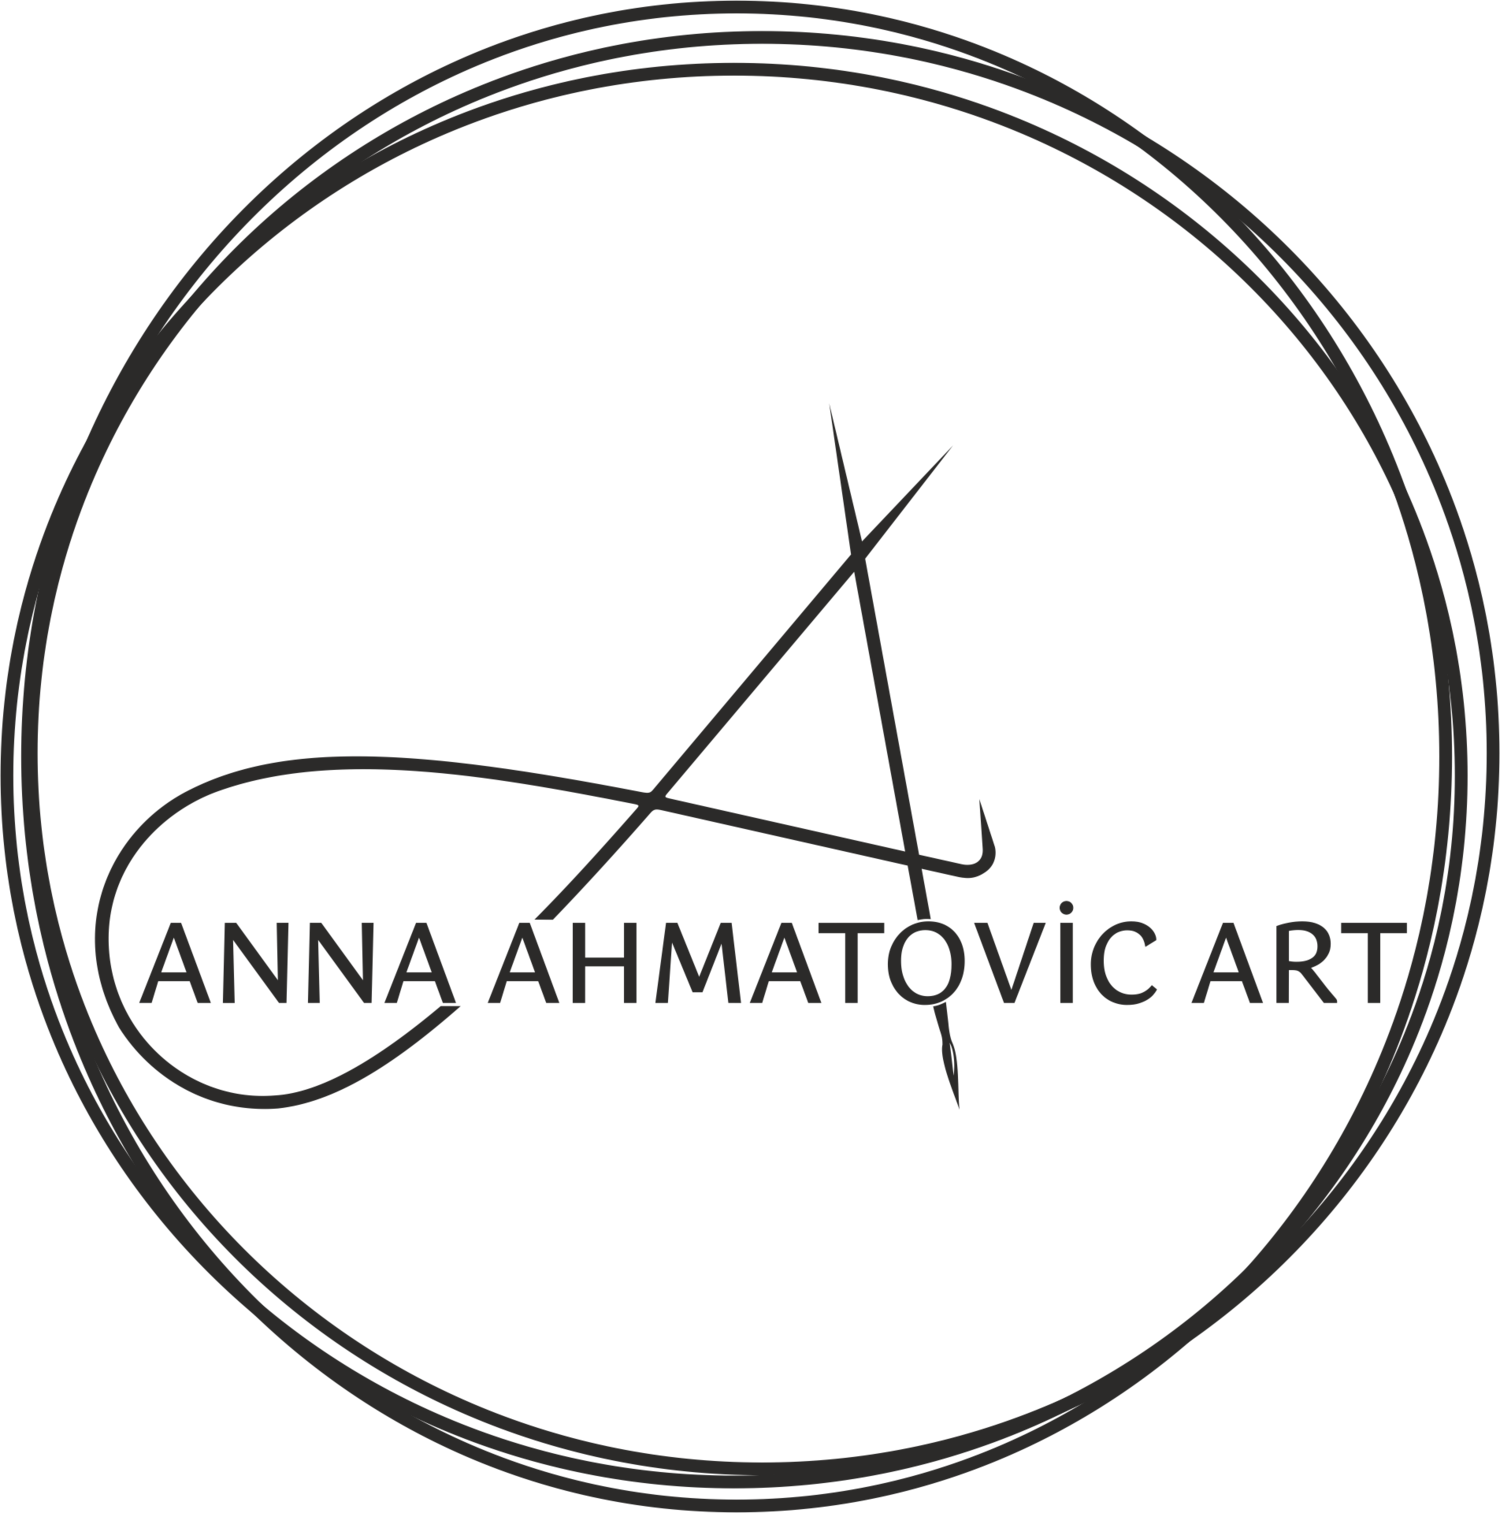 ANNA AHMATOVIC ART